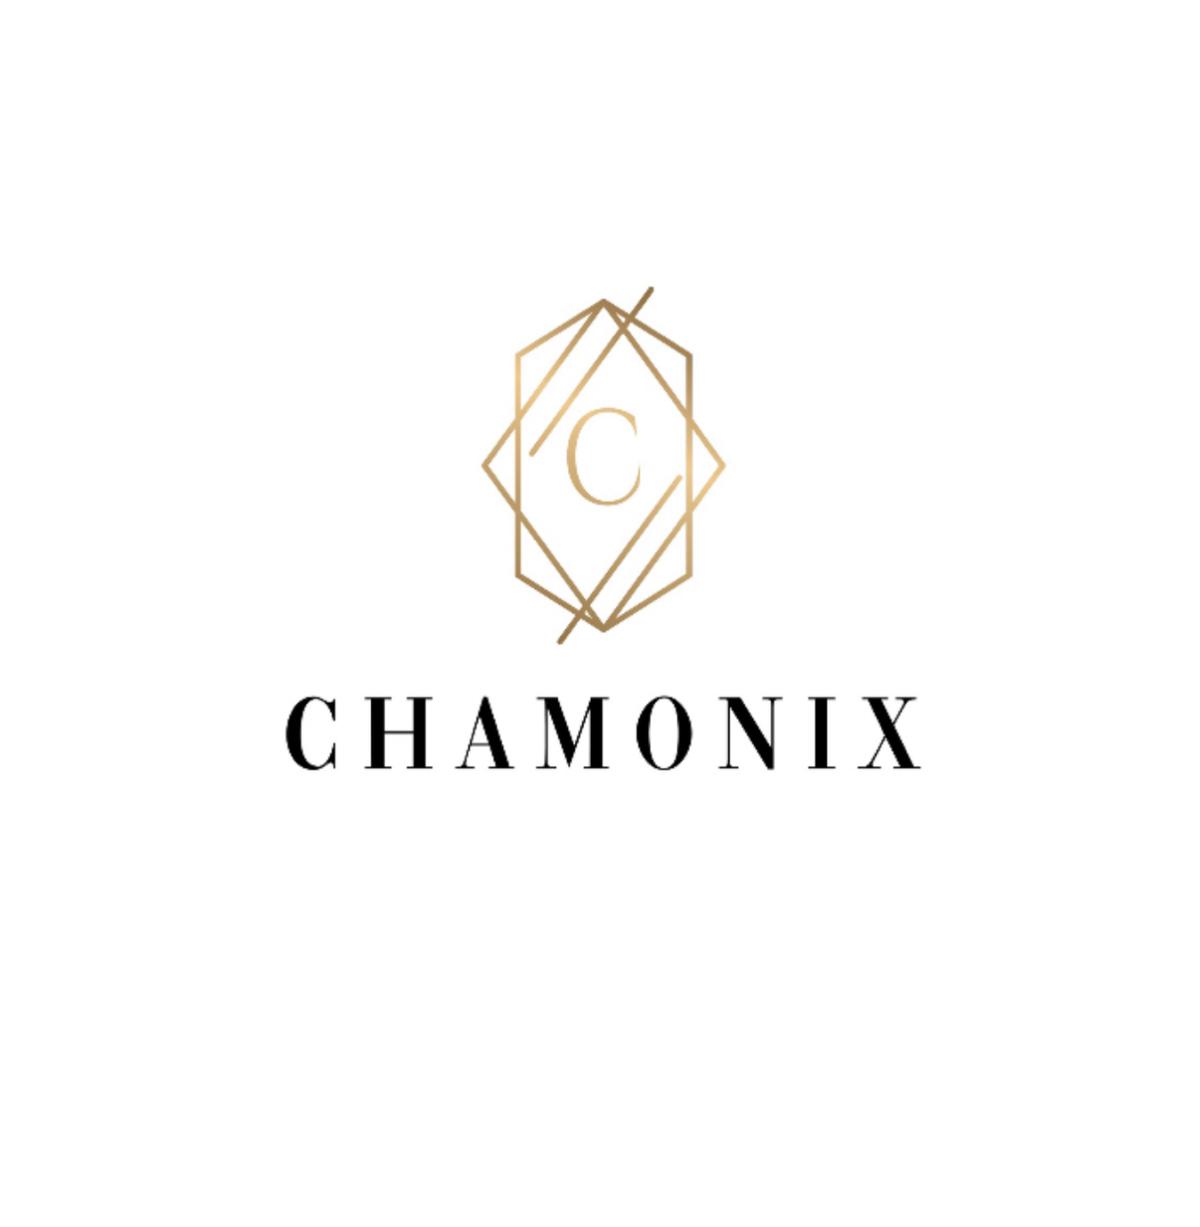 Chamonix salon